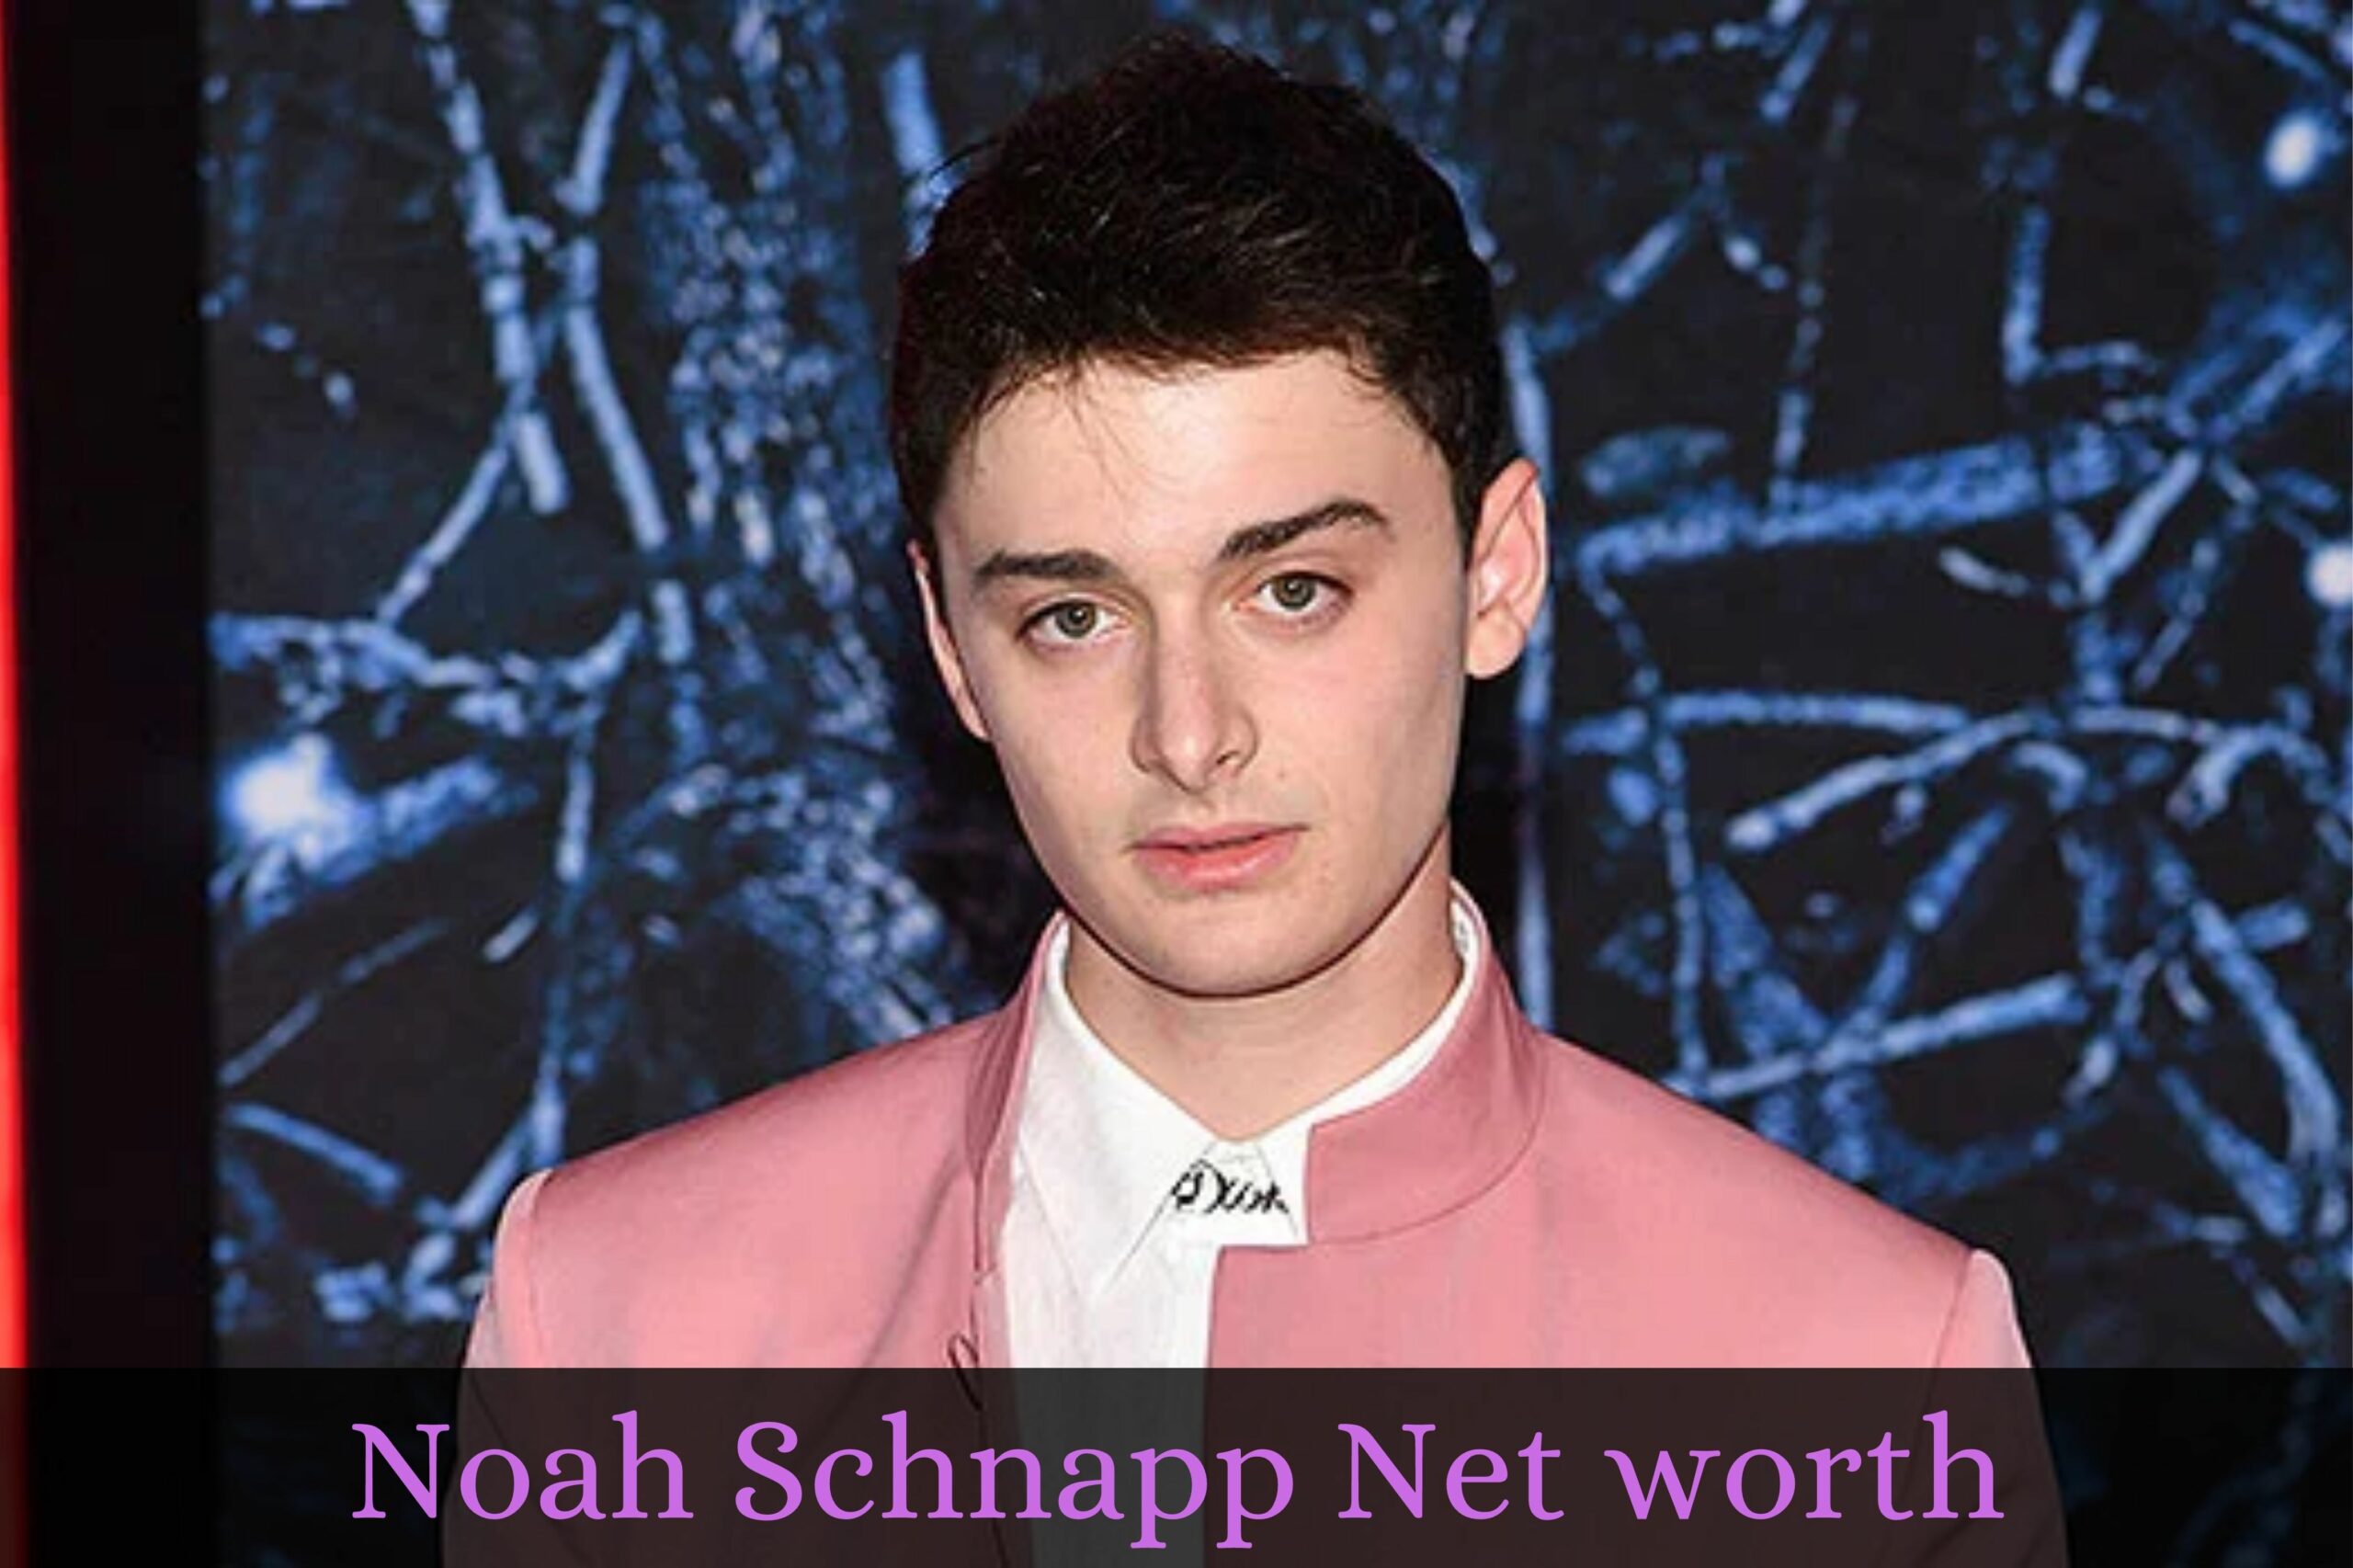 Noah Schnapp Net worth 2022, How Much Money Does Noah Schnapp Earn From Stranger Things?